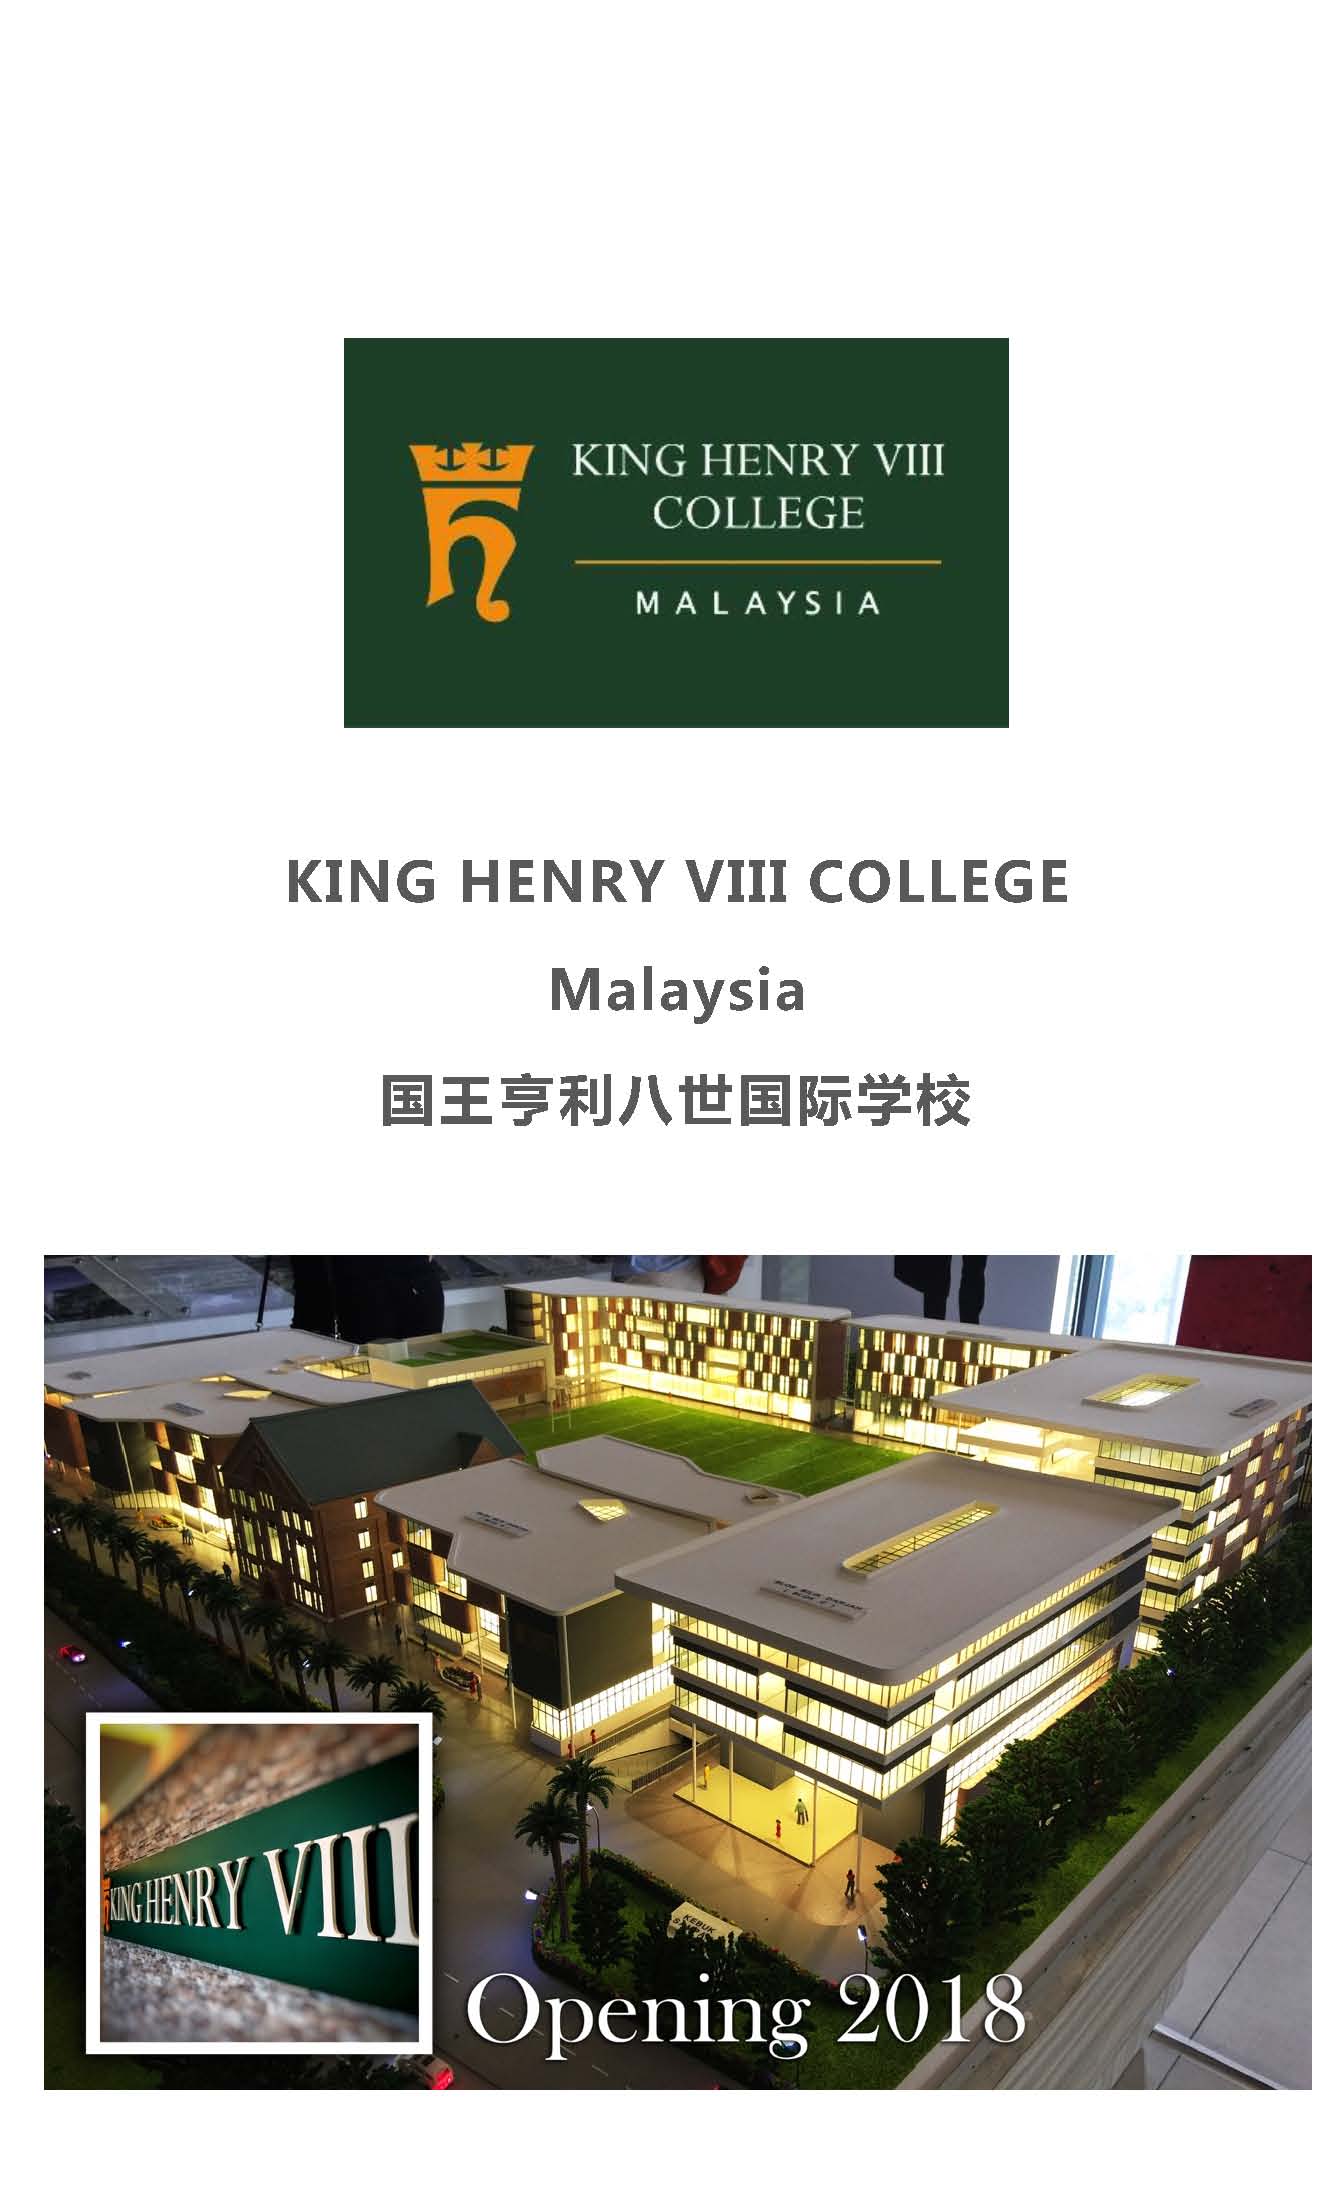 College king henry viii King Henry